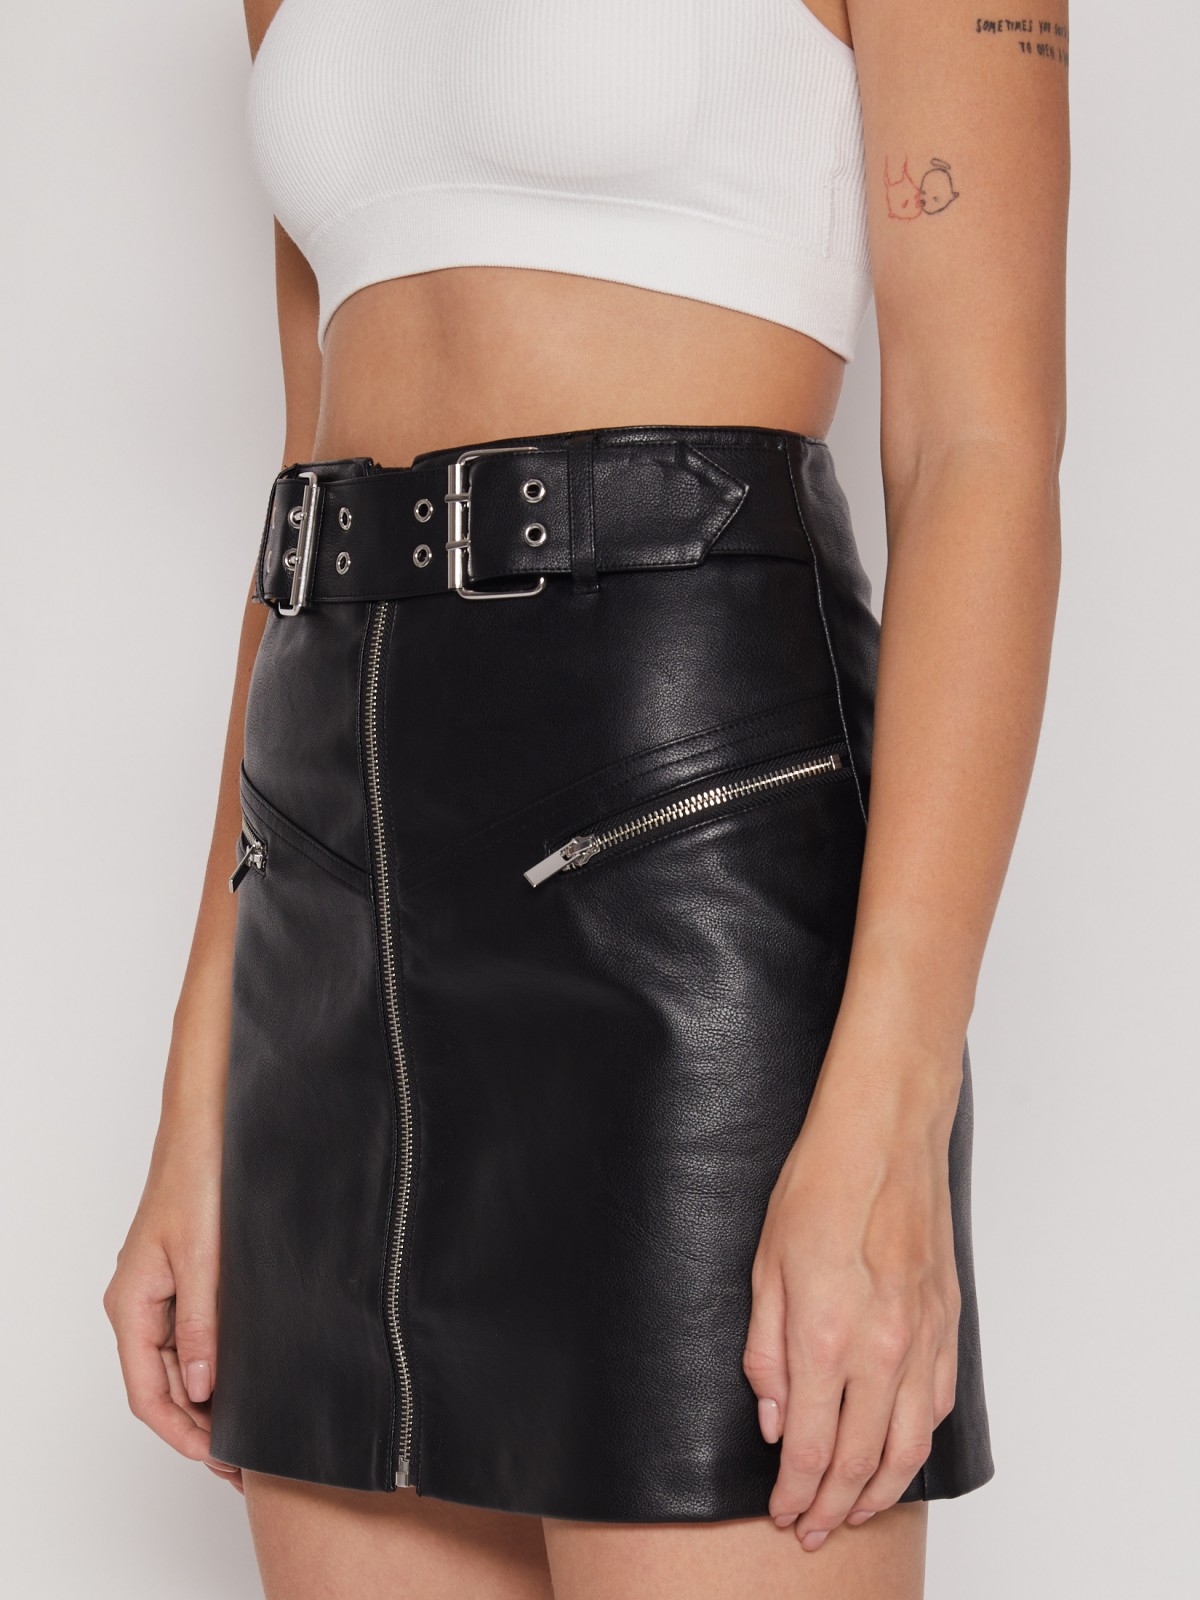 Мини юбка из экокожи на молнии zolla 022117877043, цвет черный, размер XXS - фото 5